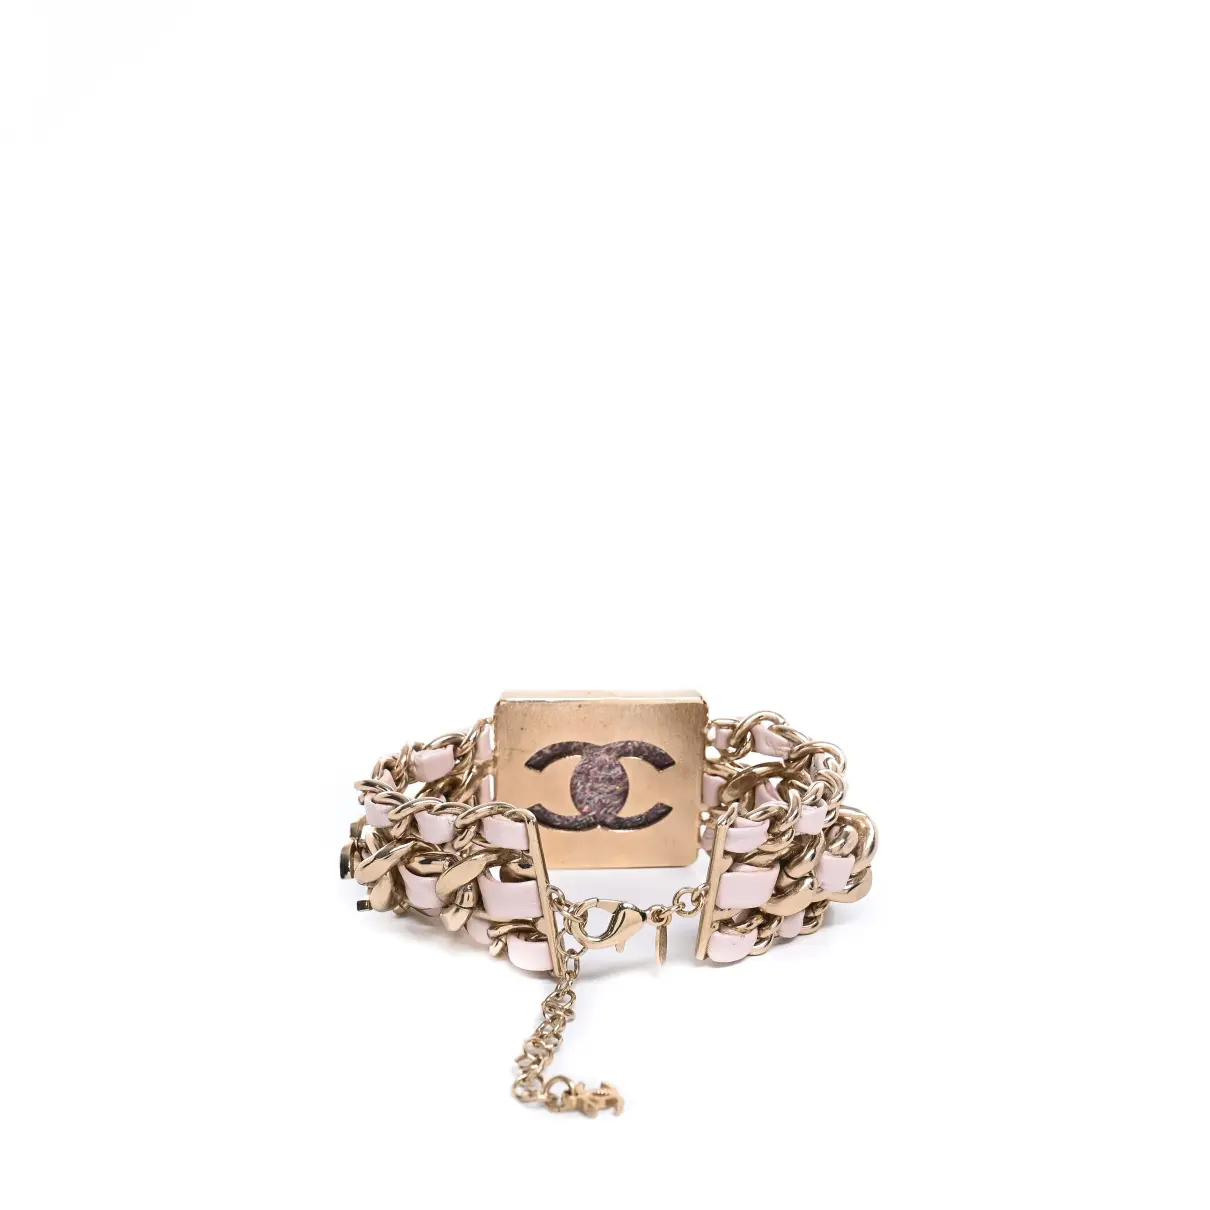 Buy Chanel Bracelet online